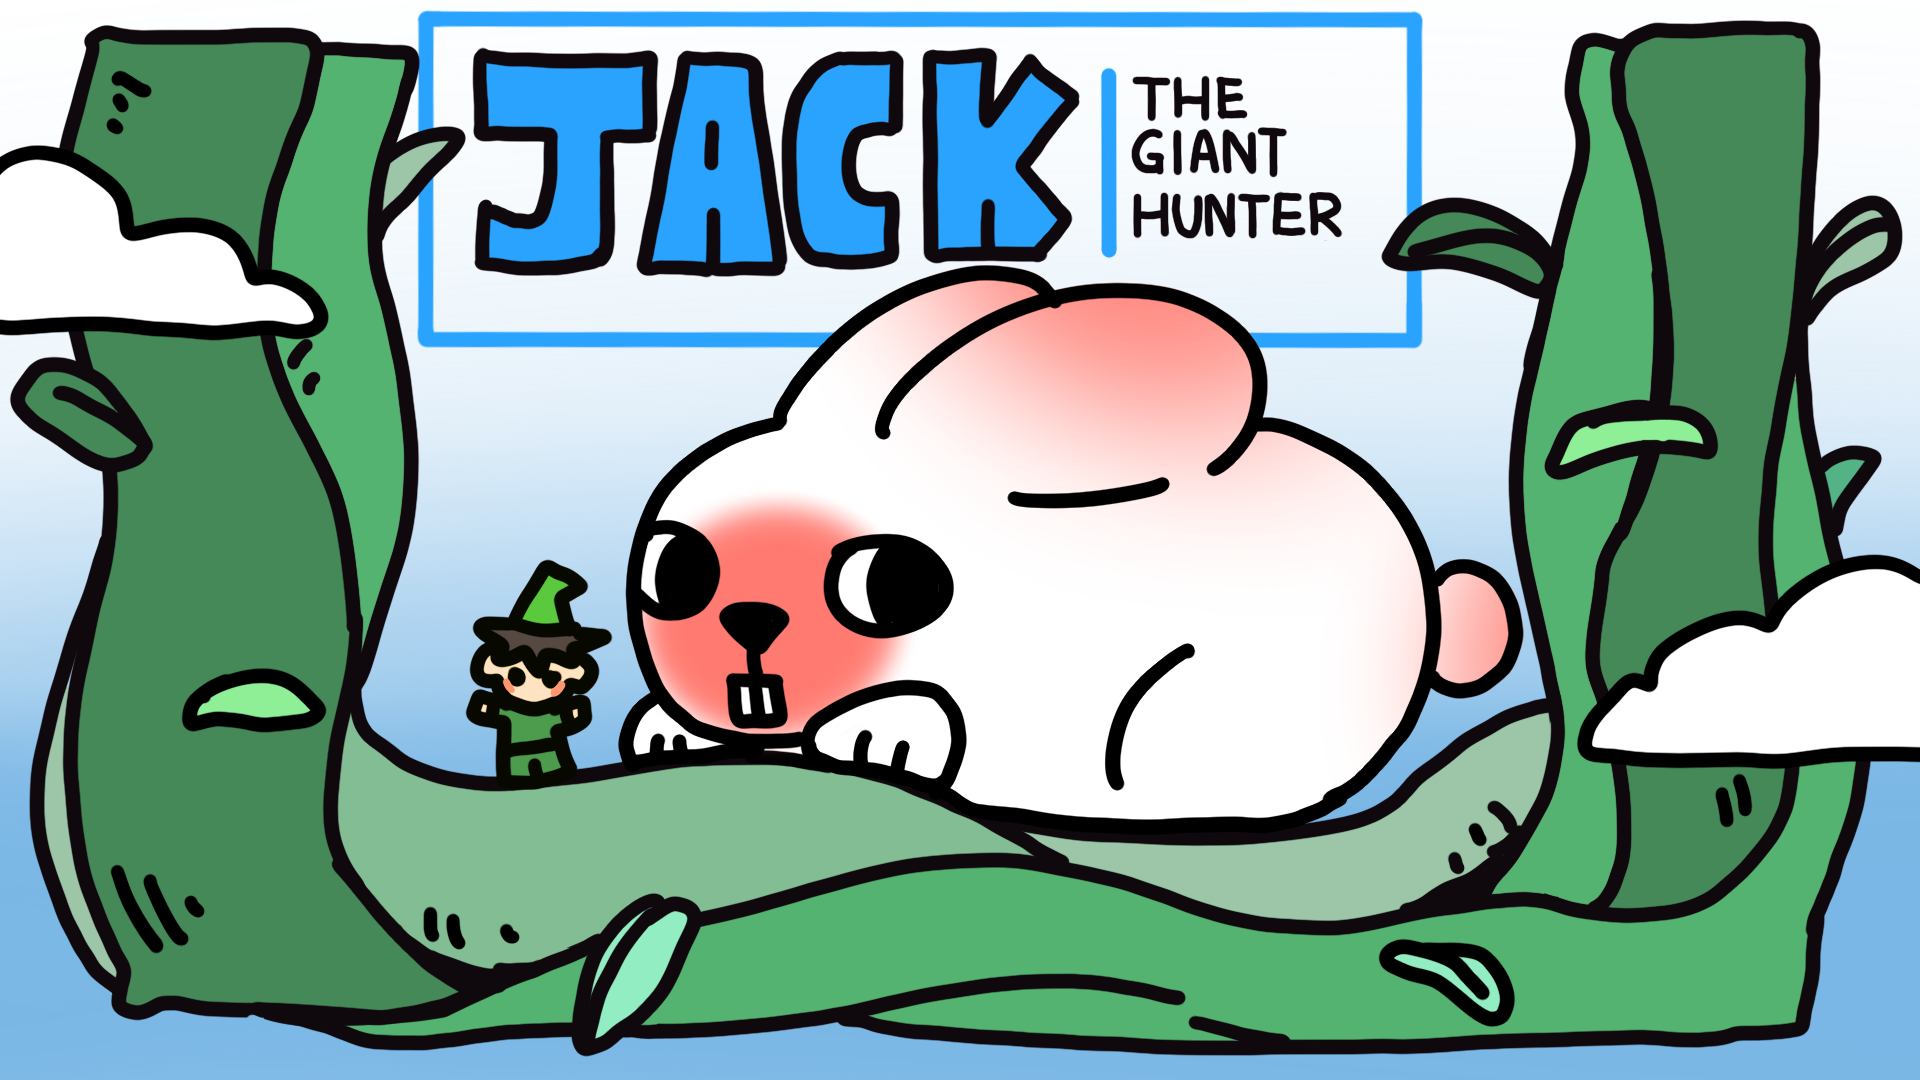 Jack-The Giant Hunter